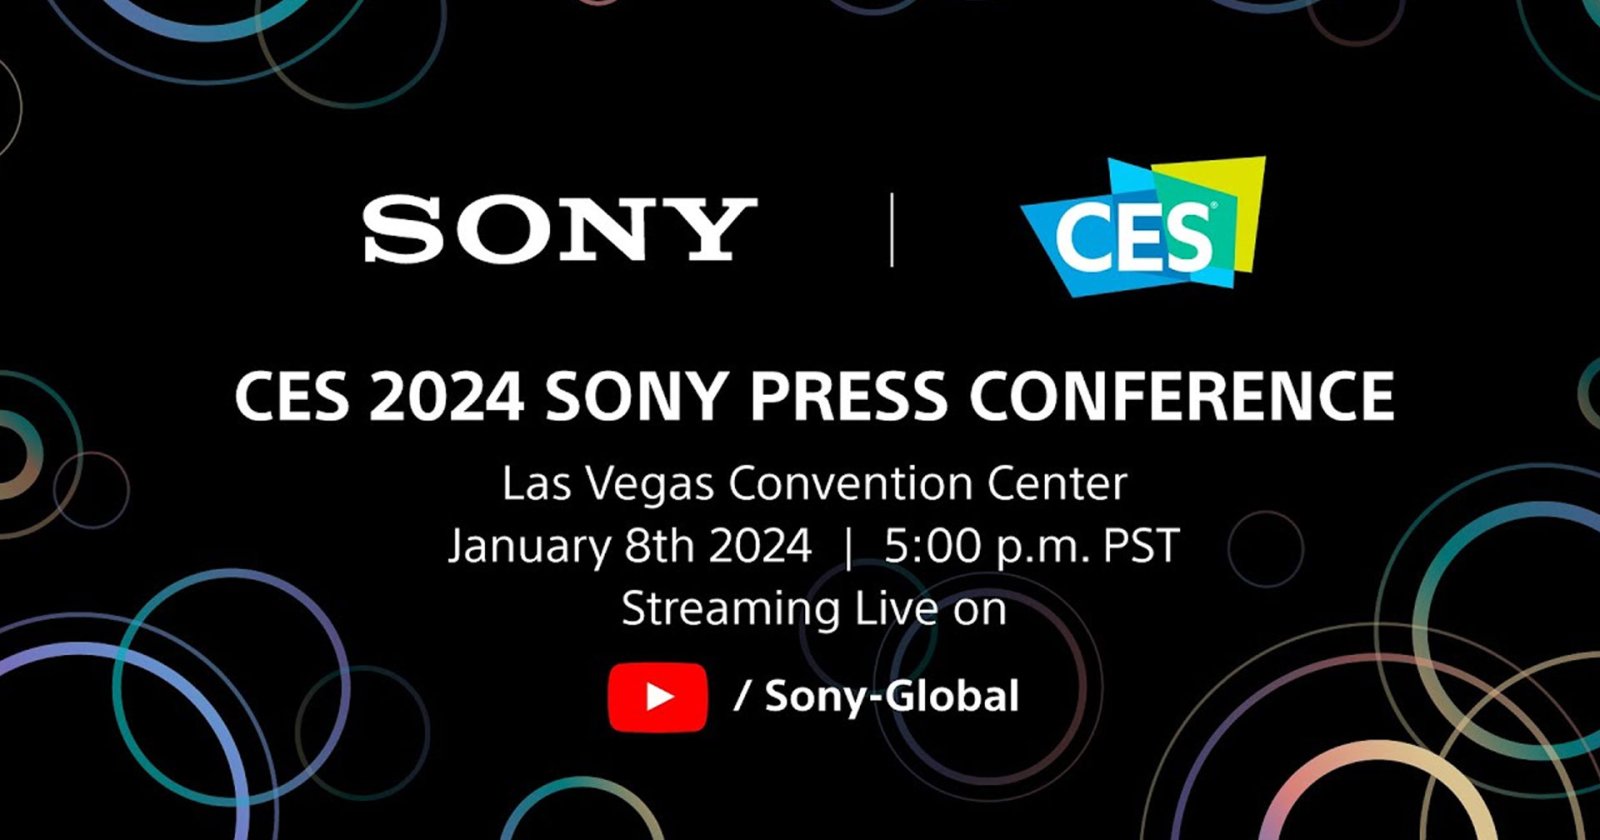 Sony เตรียมโชว์ของ ใน CES 2024 งานเทคโนโลยีระดับโลก 9 มกราคม หรือจะเป็นกล้องซีรีส์ FX รุ่นใหม่!?